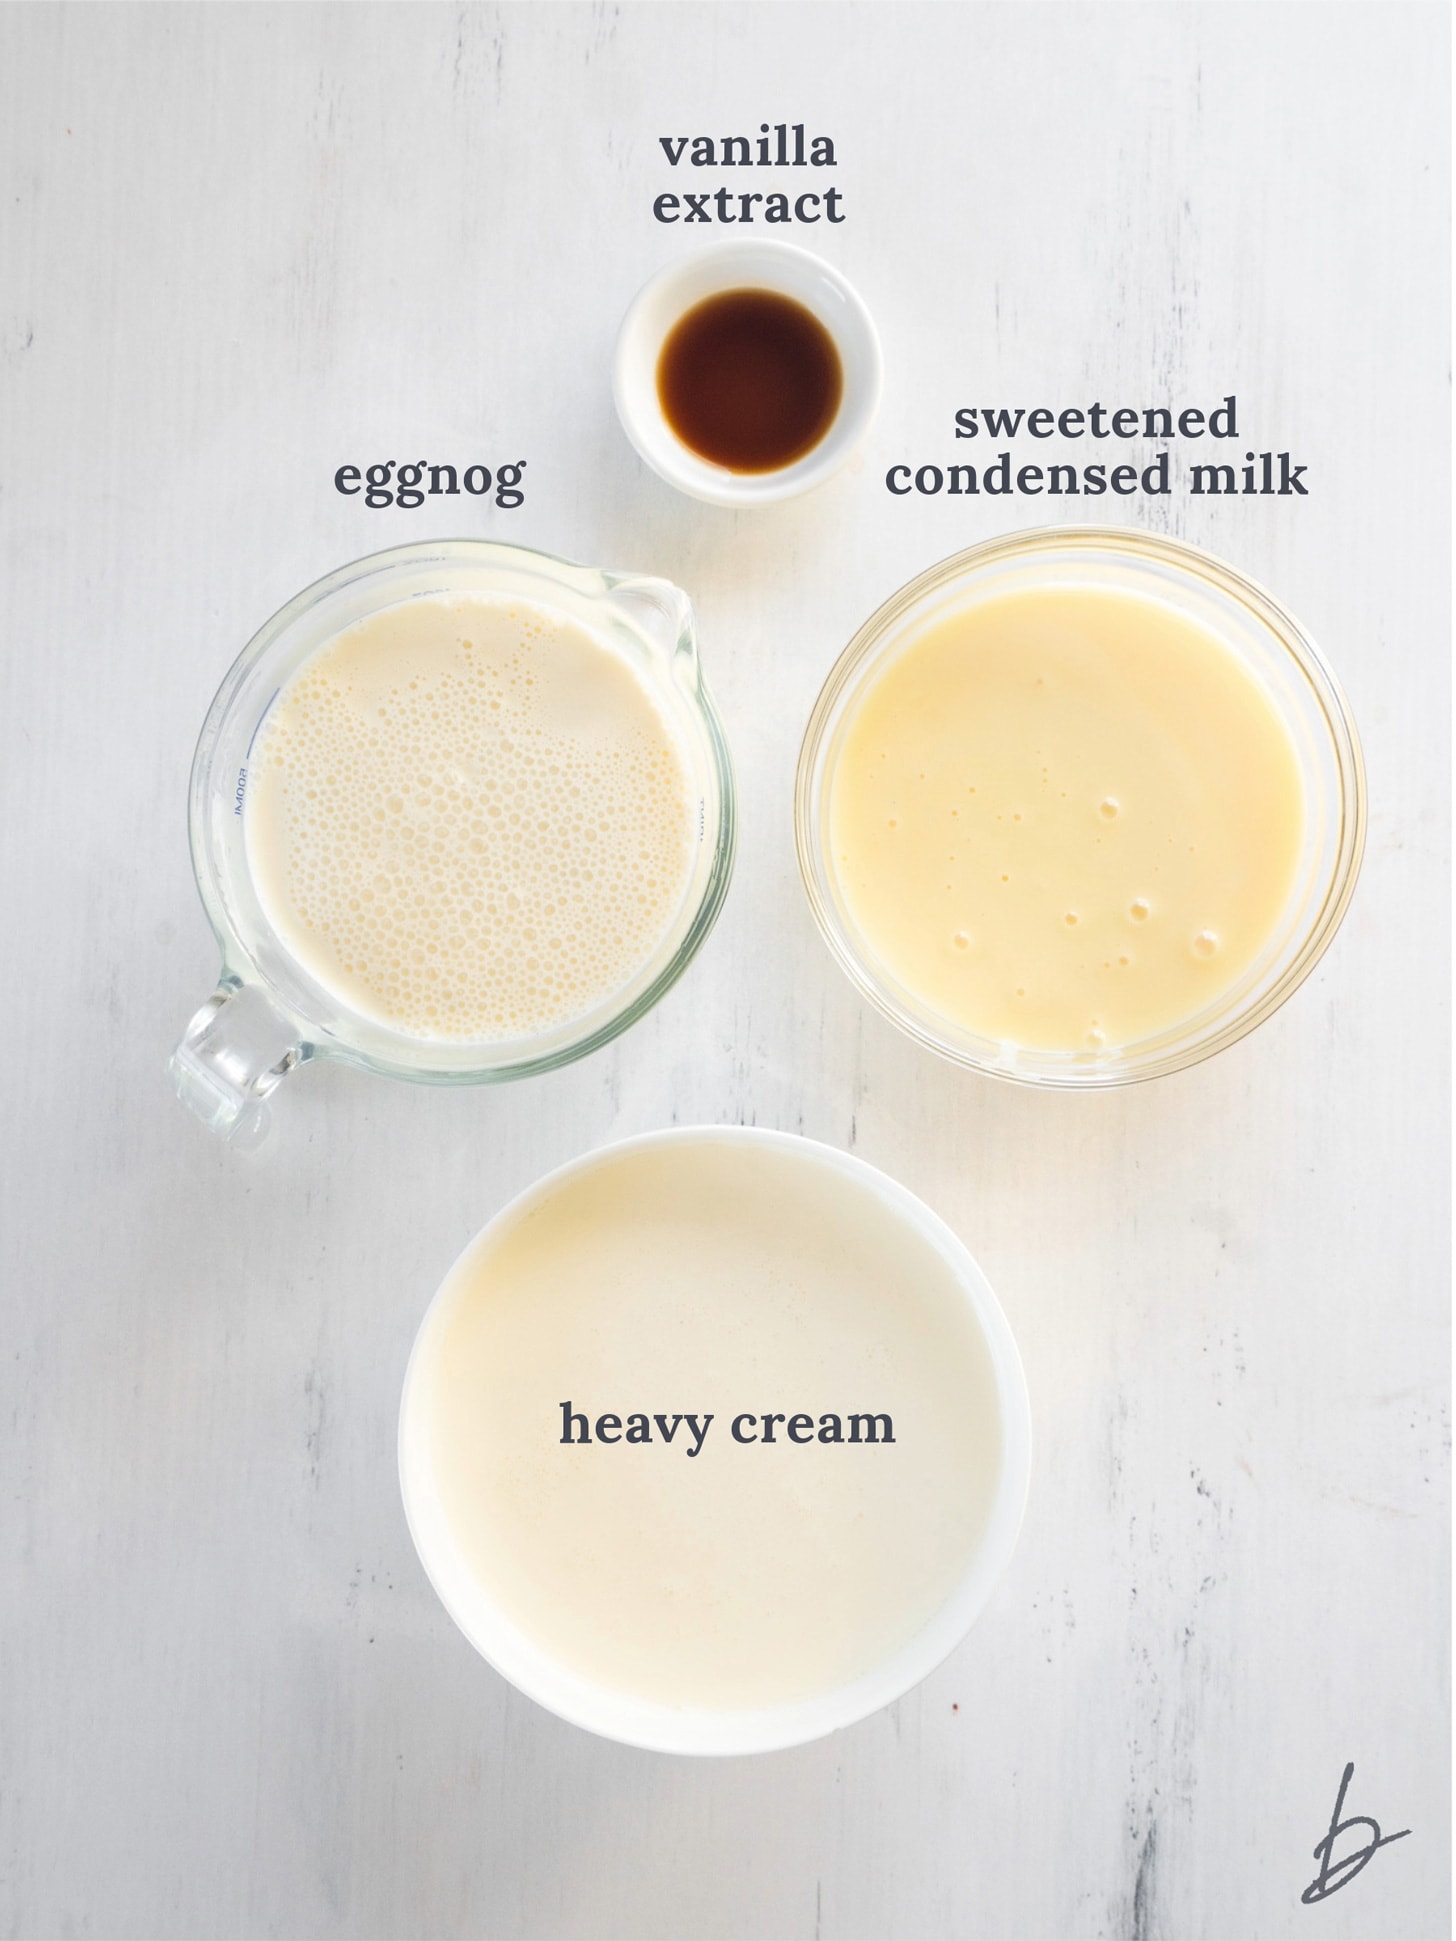 bowls of ingredients to make eggnog ice cream.